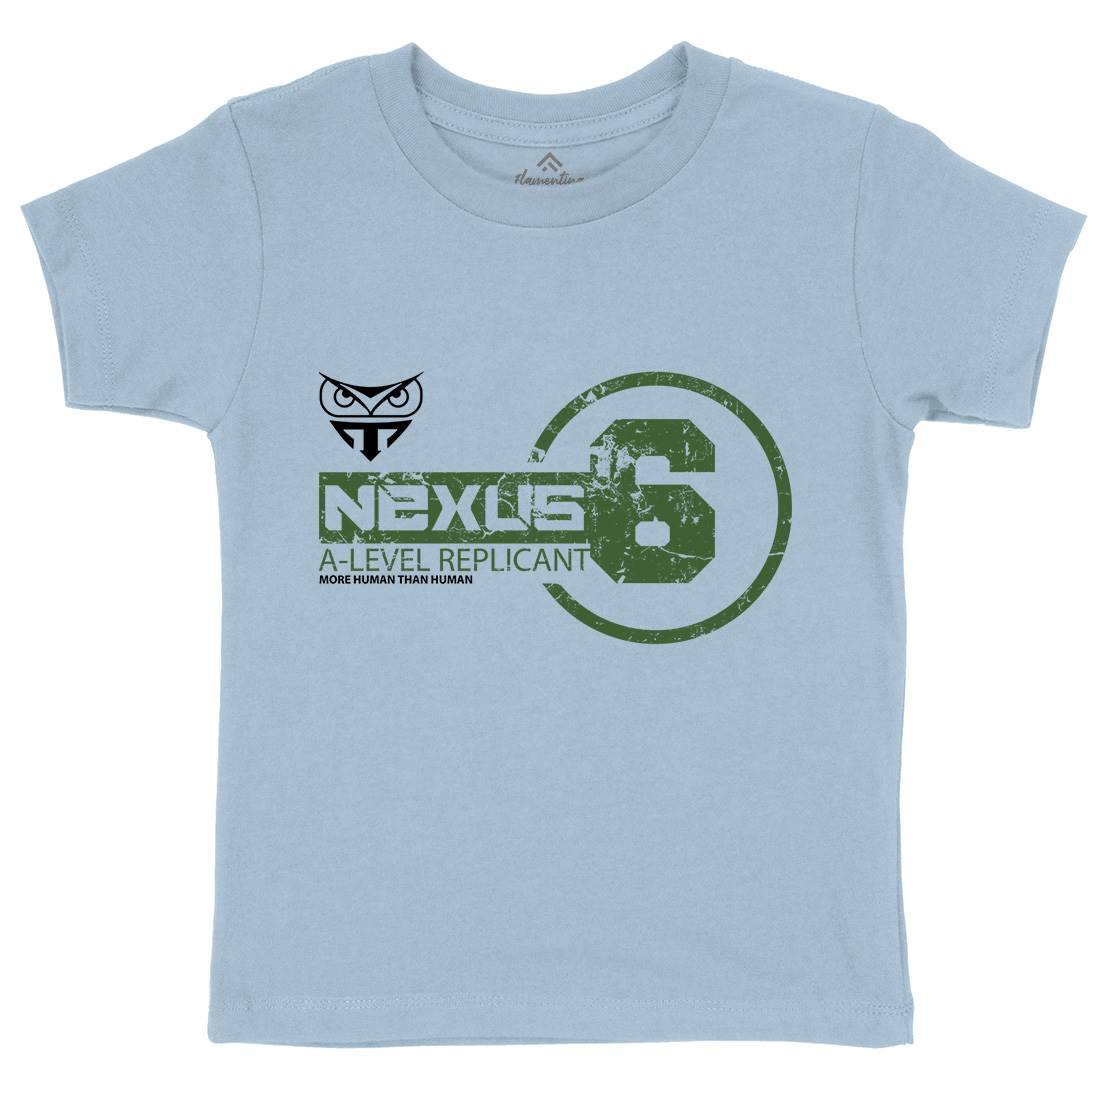 Nexus-6 Kids Crew Neck T-Shirt Space D222